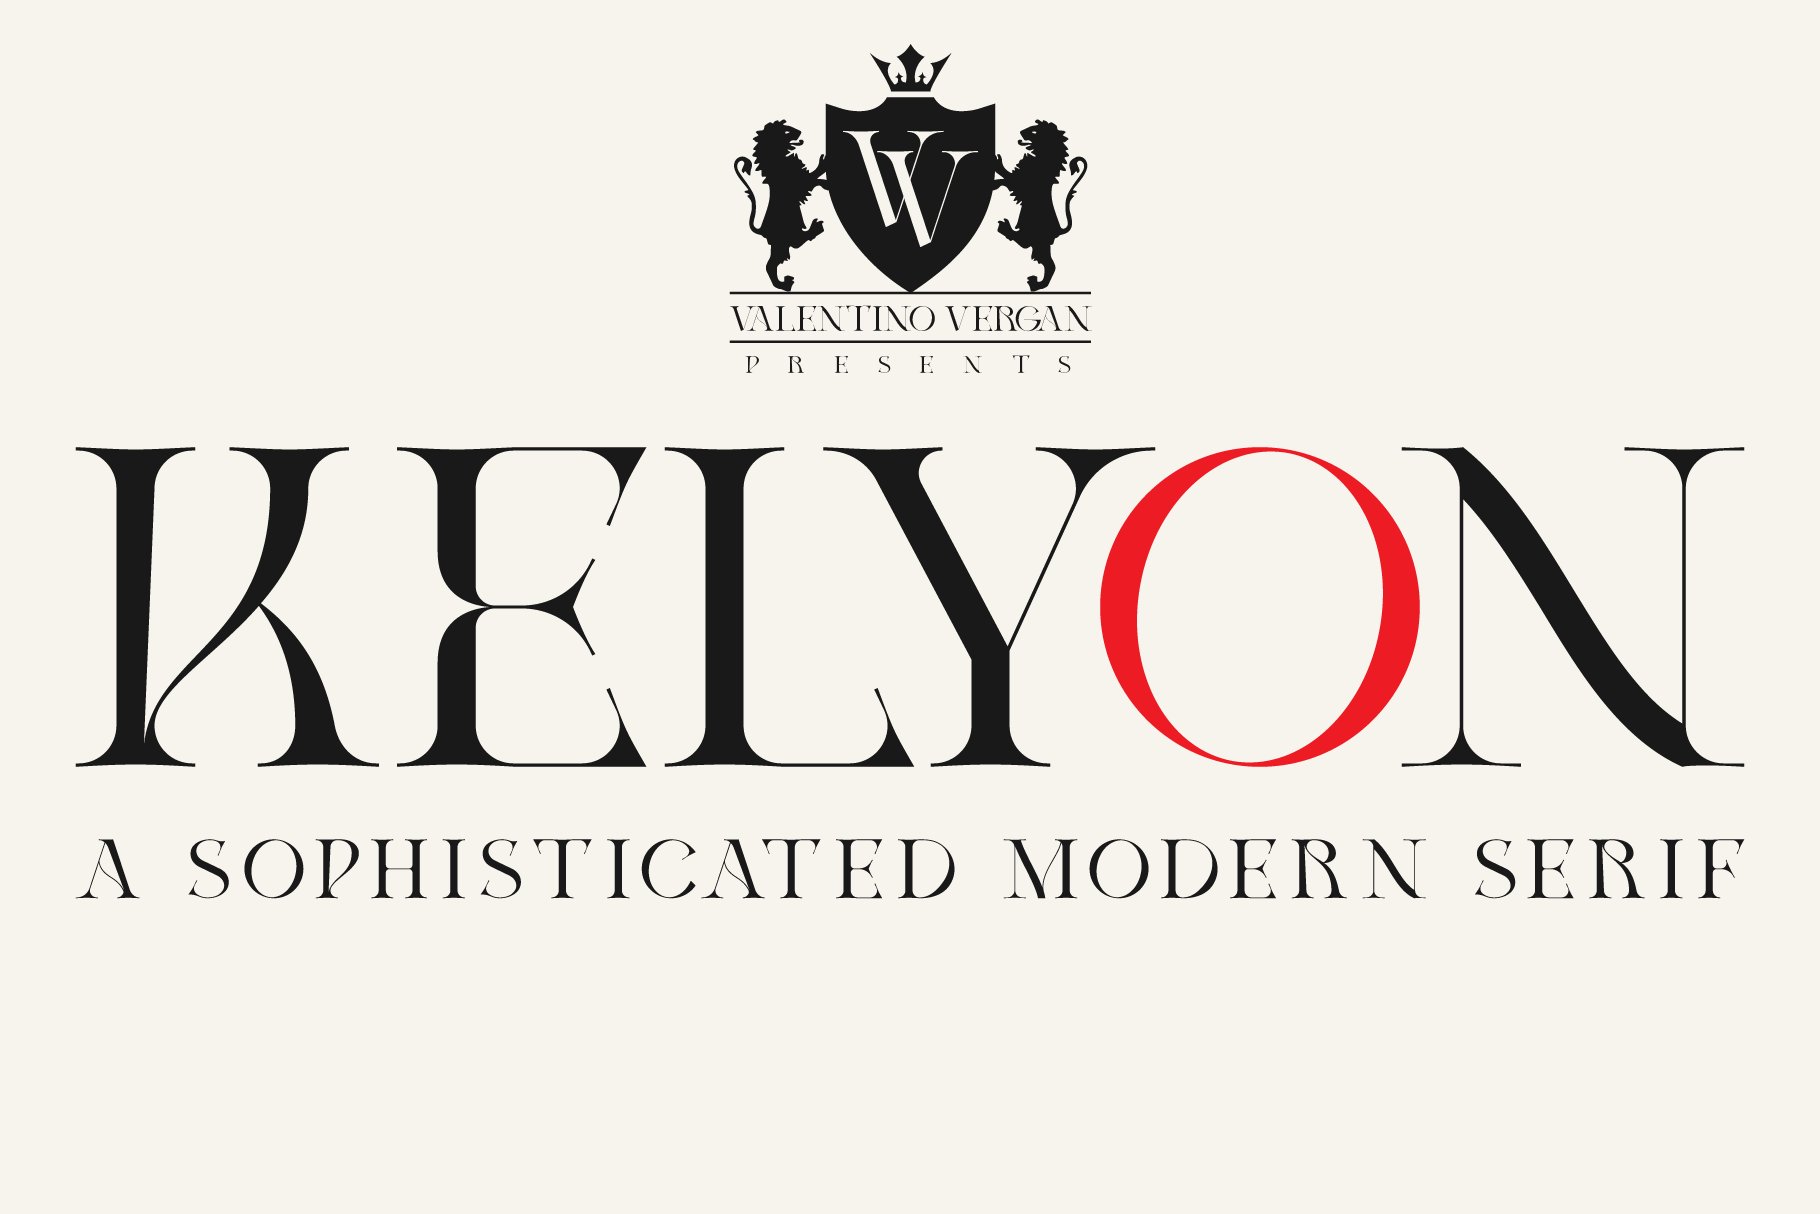 Kelyon - Modern Serifcover image.